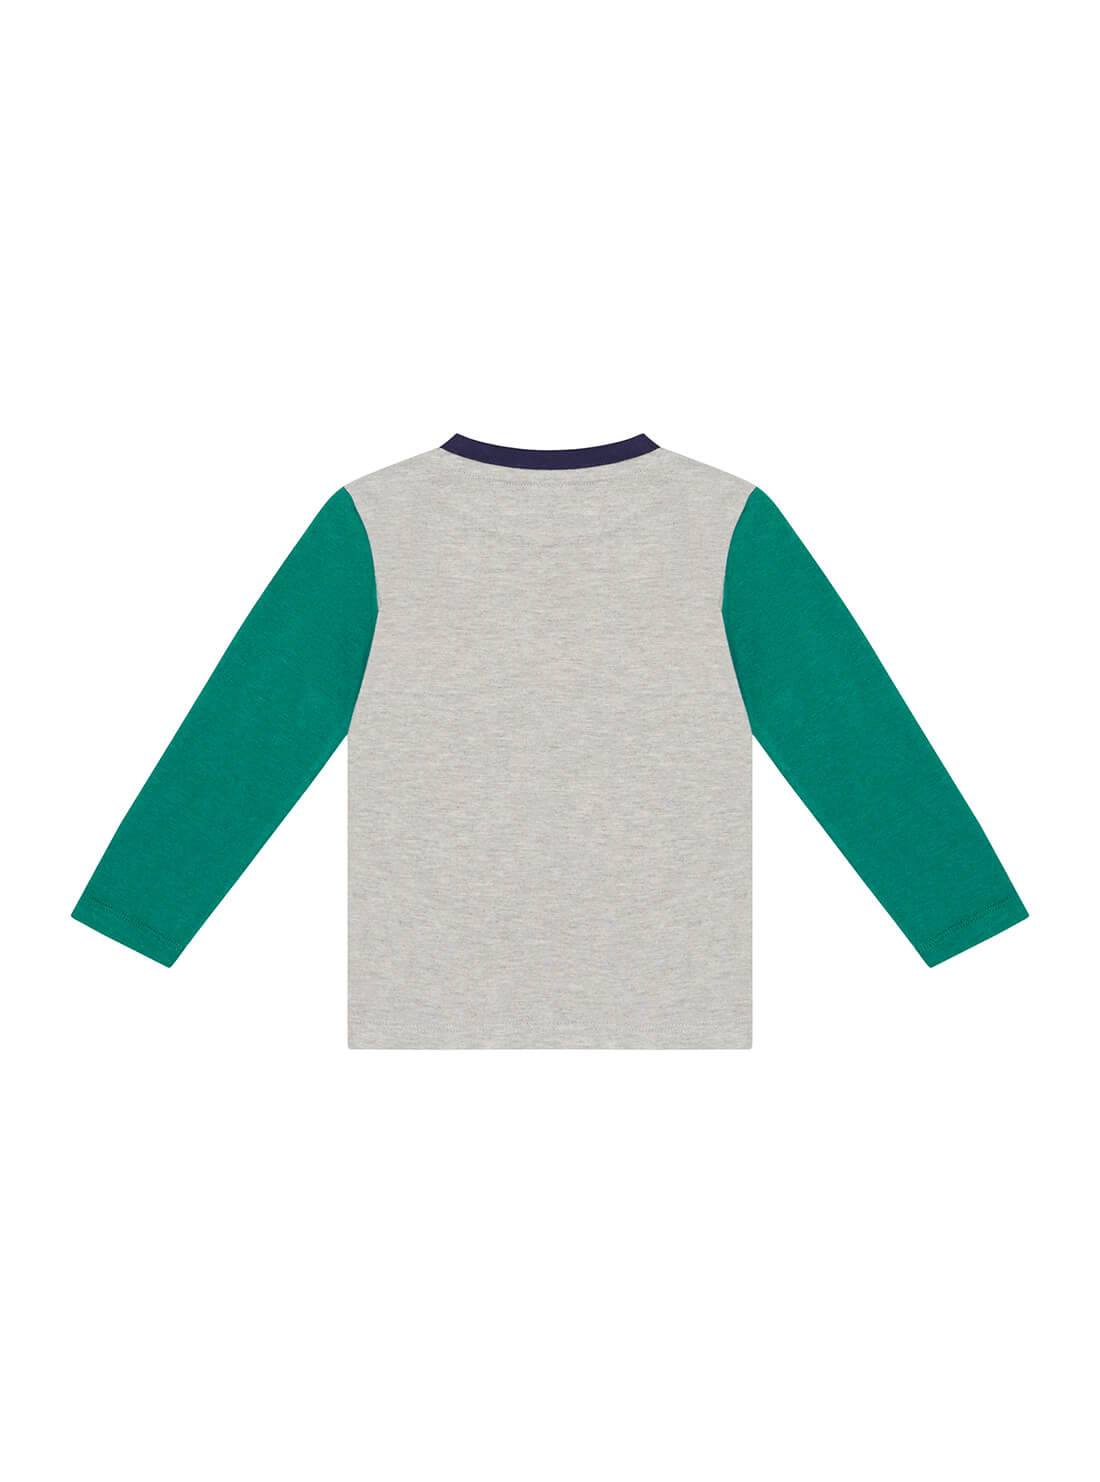 GUESS Kids Boys Grey Combo Green Logo T-Shirt (3-18m) I1BI01KAV20 Back View